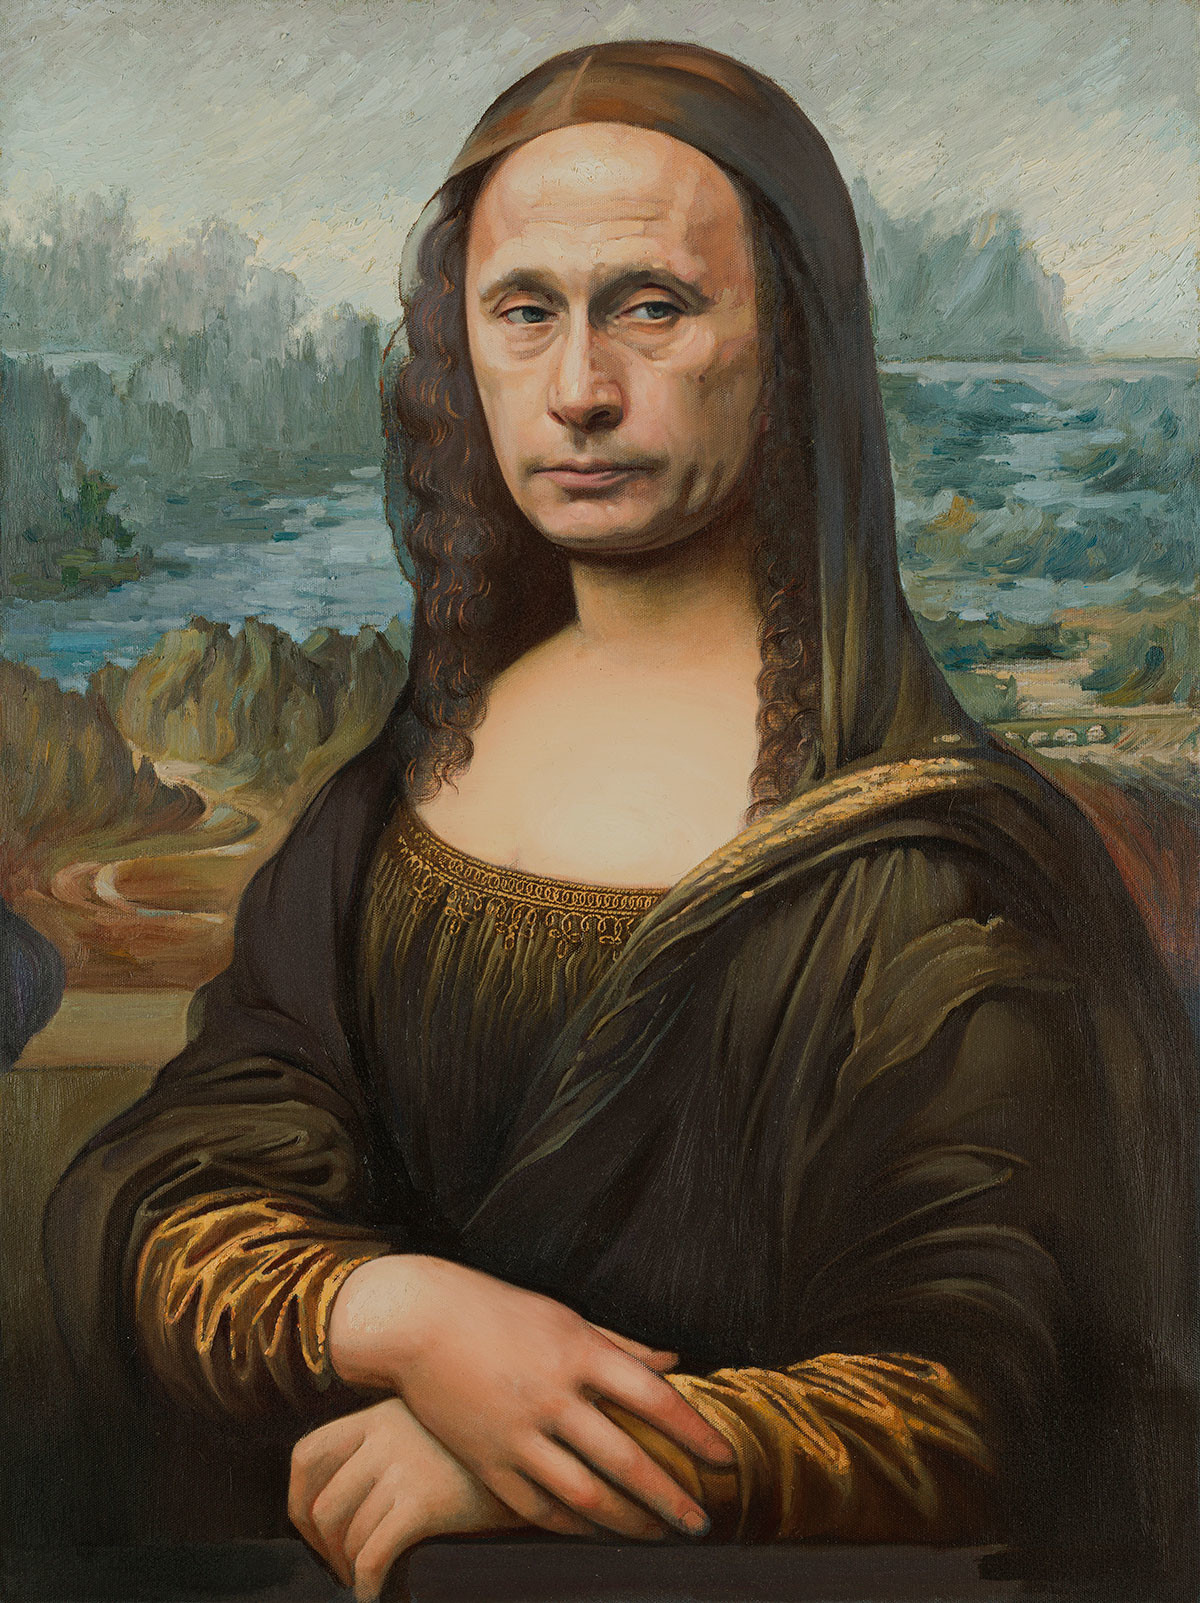 Aleksander Kosolapov. Mona Lisa, 2020
